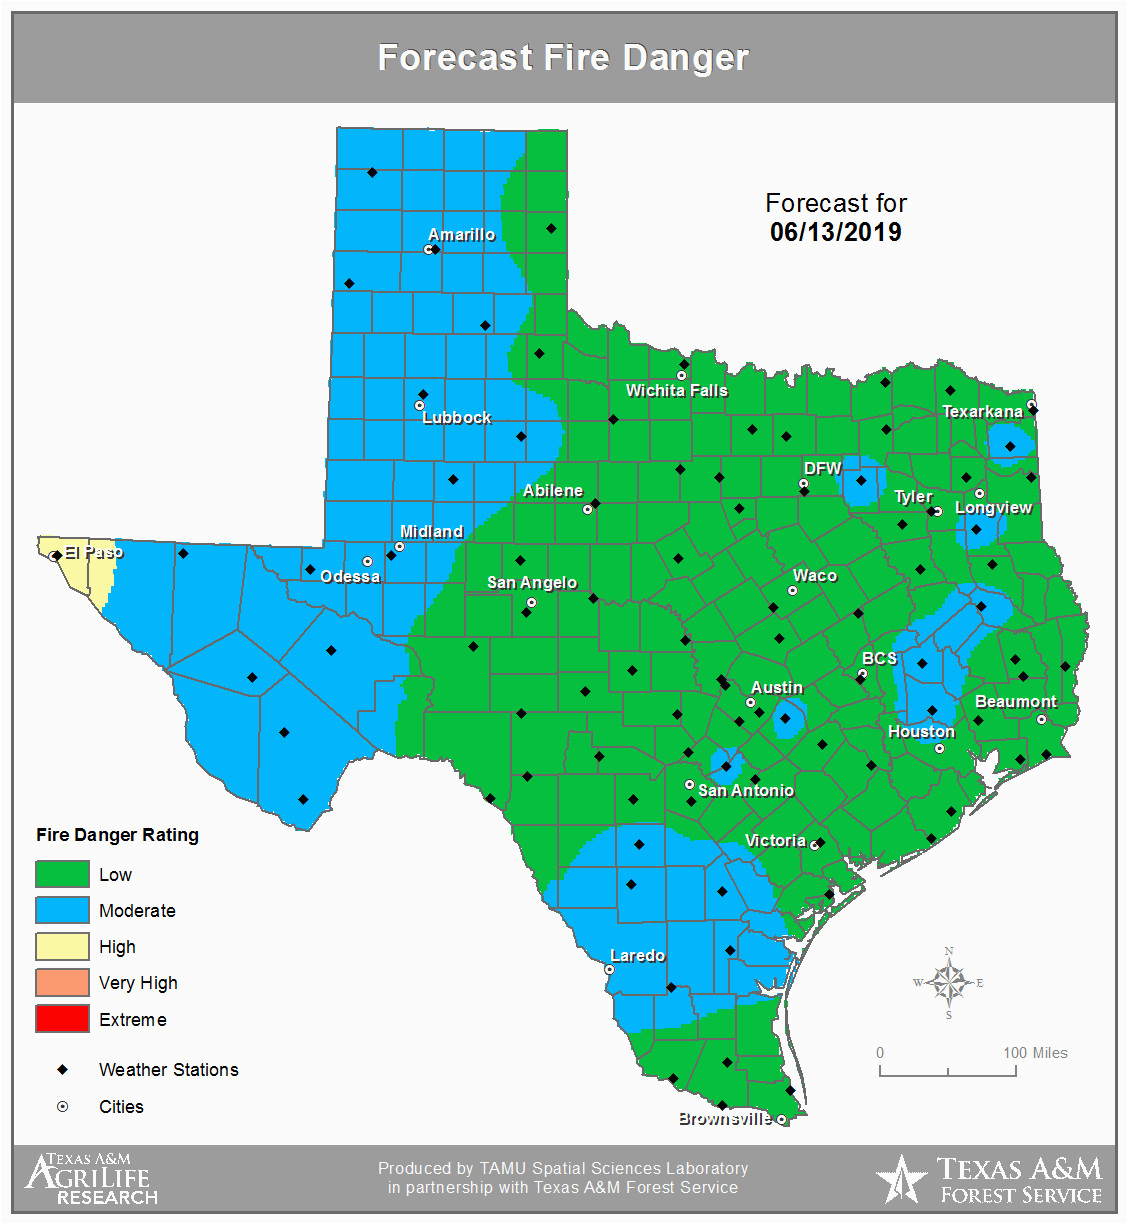 East Texas Burn Ban Map Texas Wildfires Map Wildfires In Texas Wildland Fire Of East Texas Burn Ban Map 